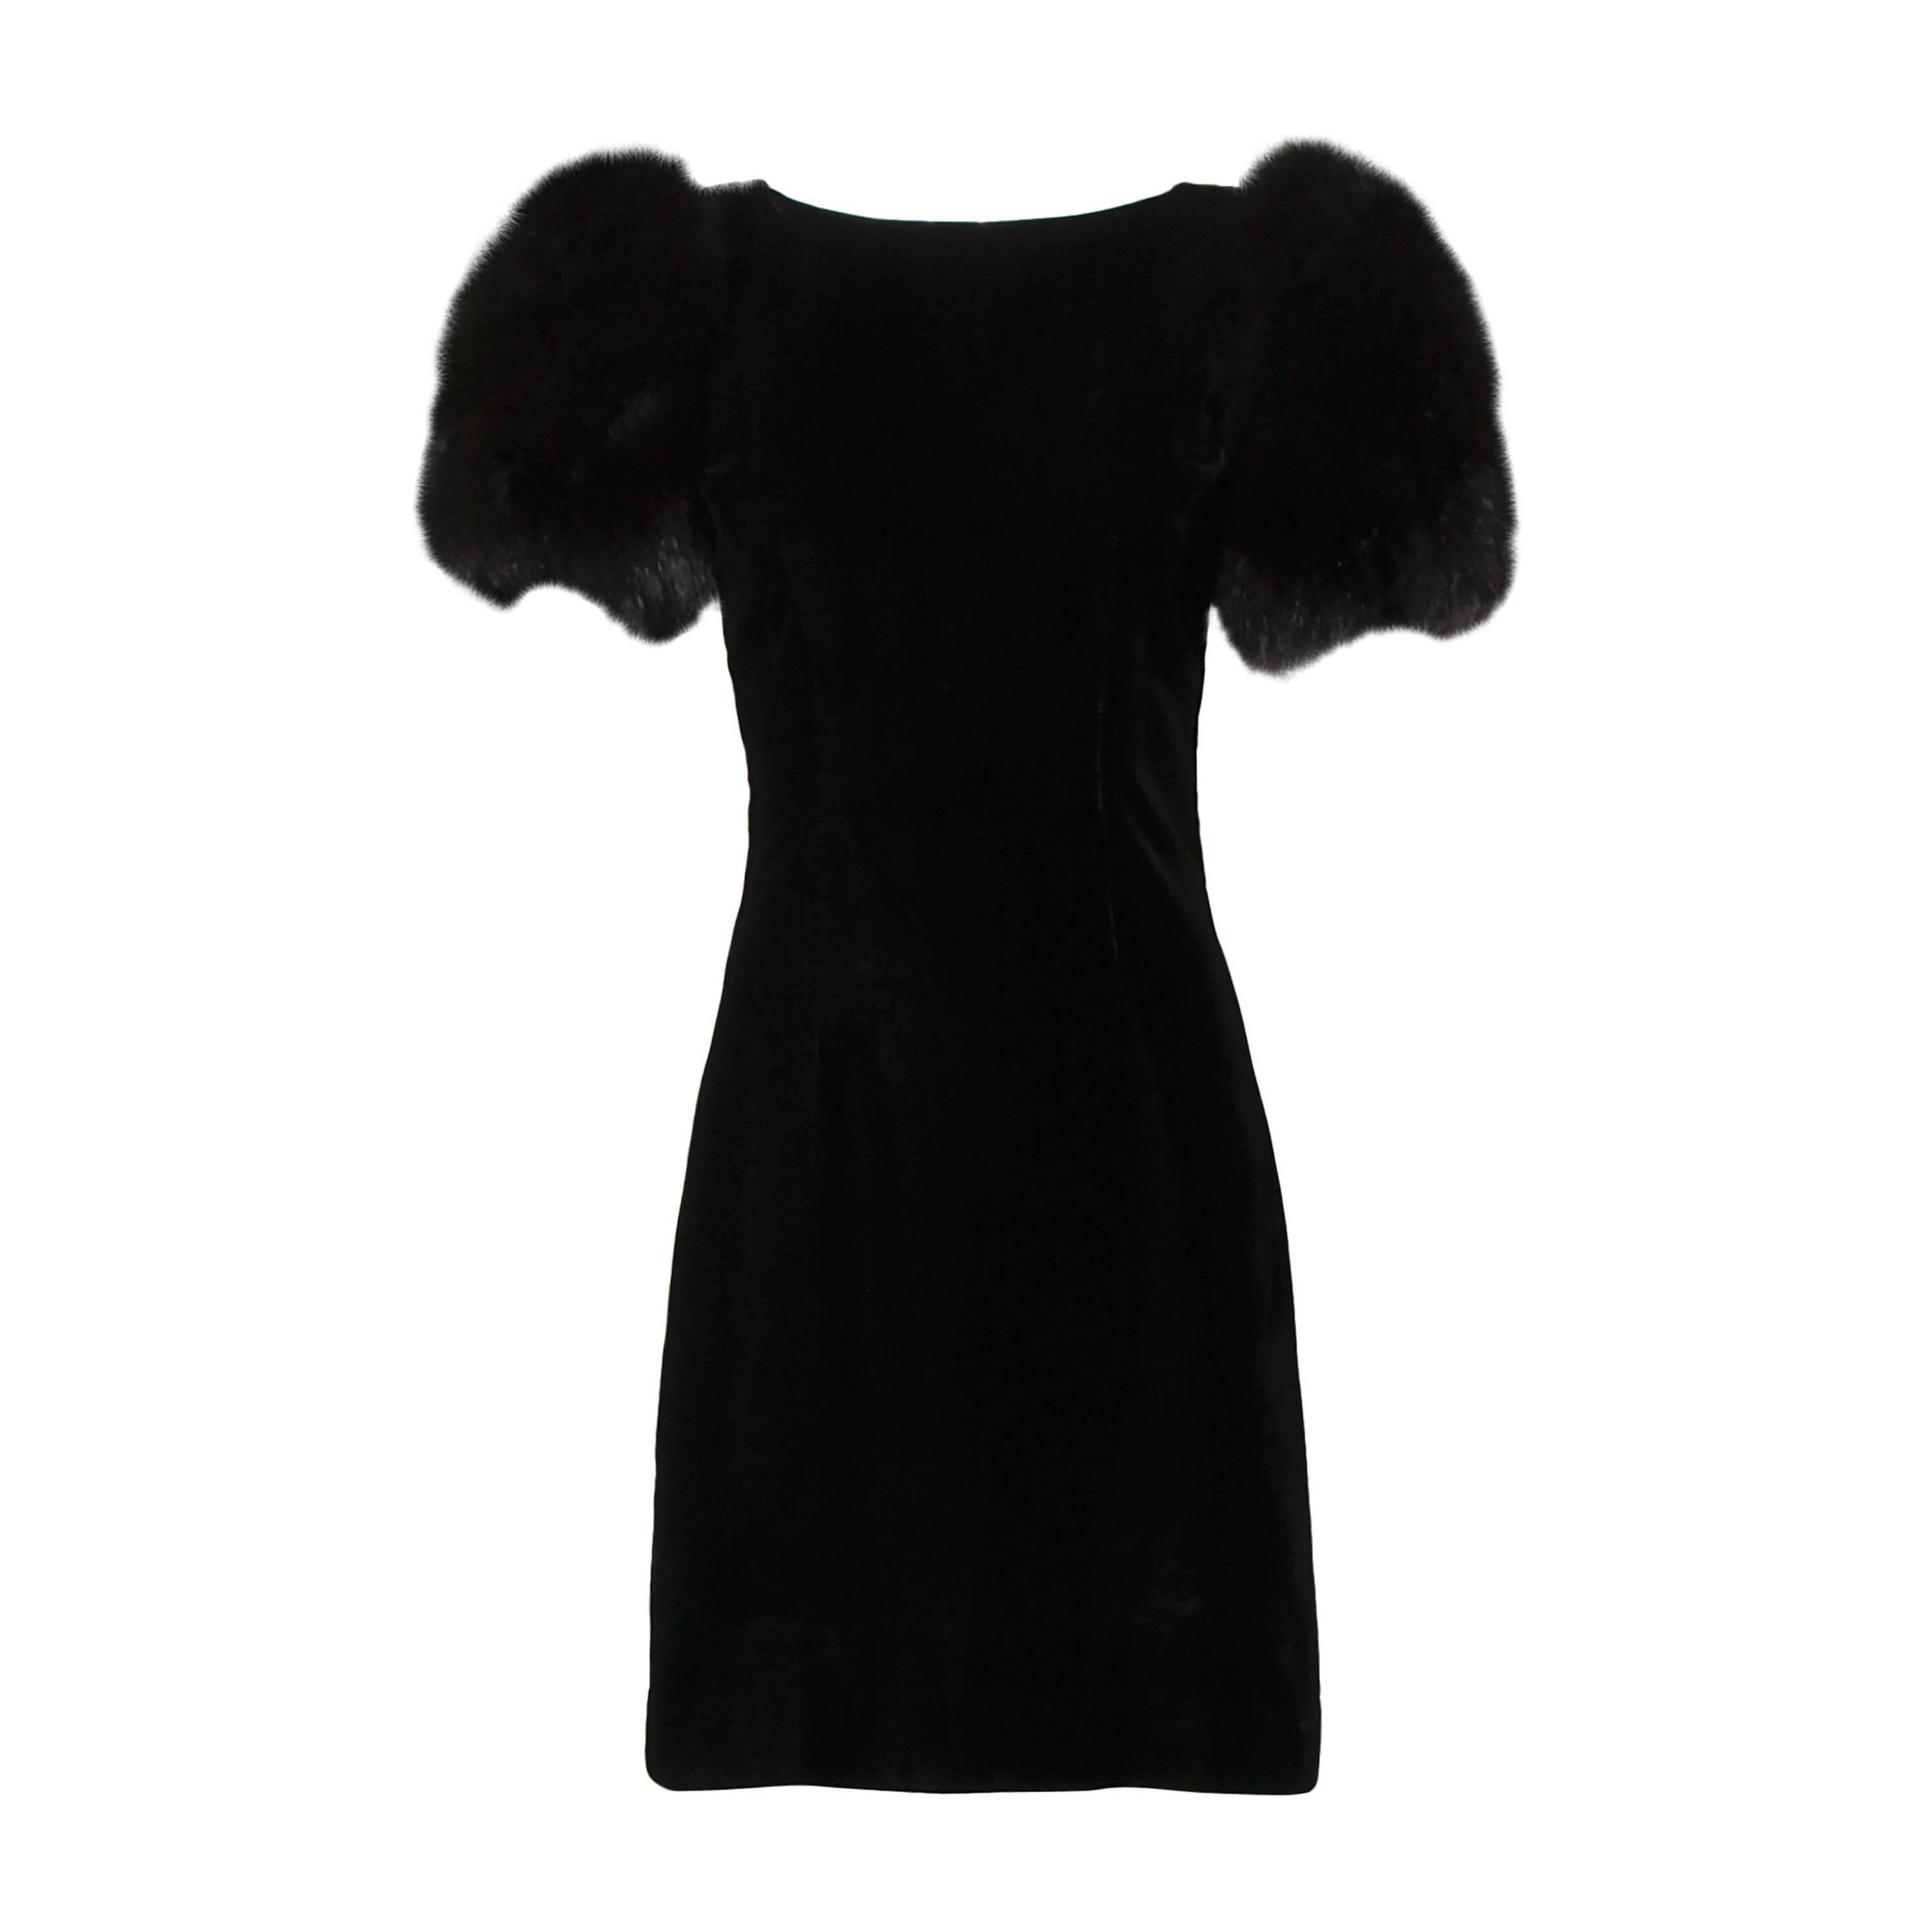 Victor Costa Vintage Black Velvet Dress with Fox Fur Sleeves